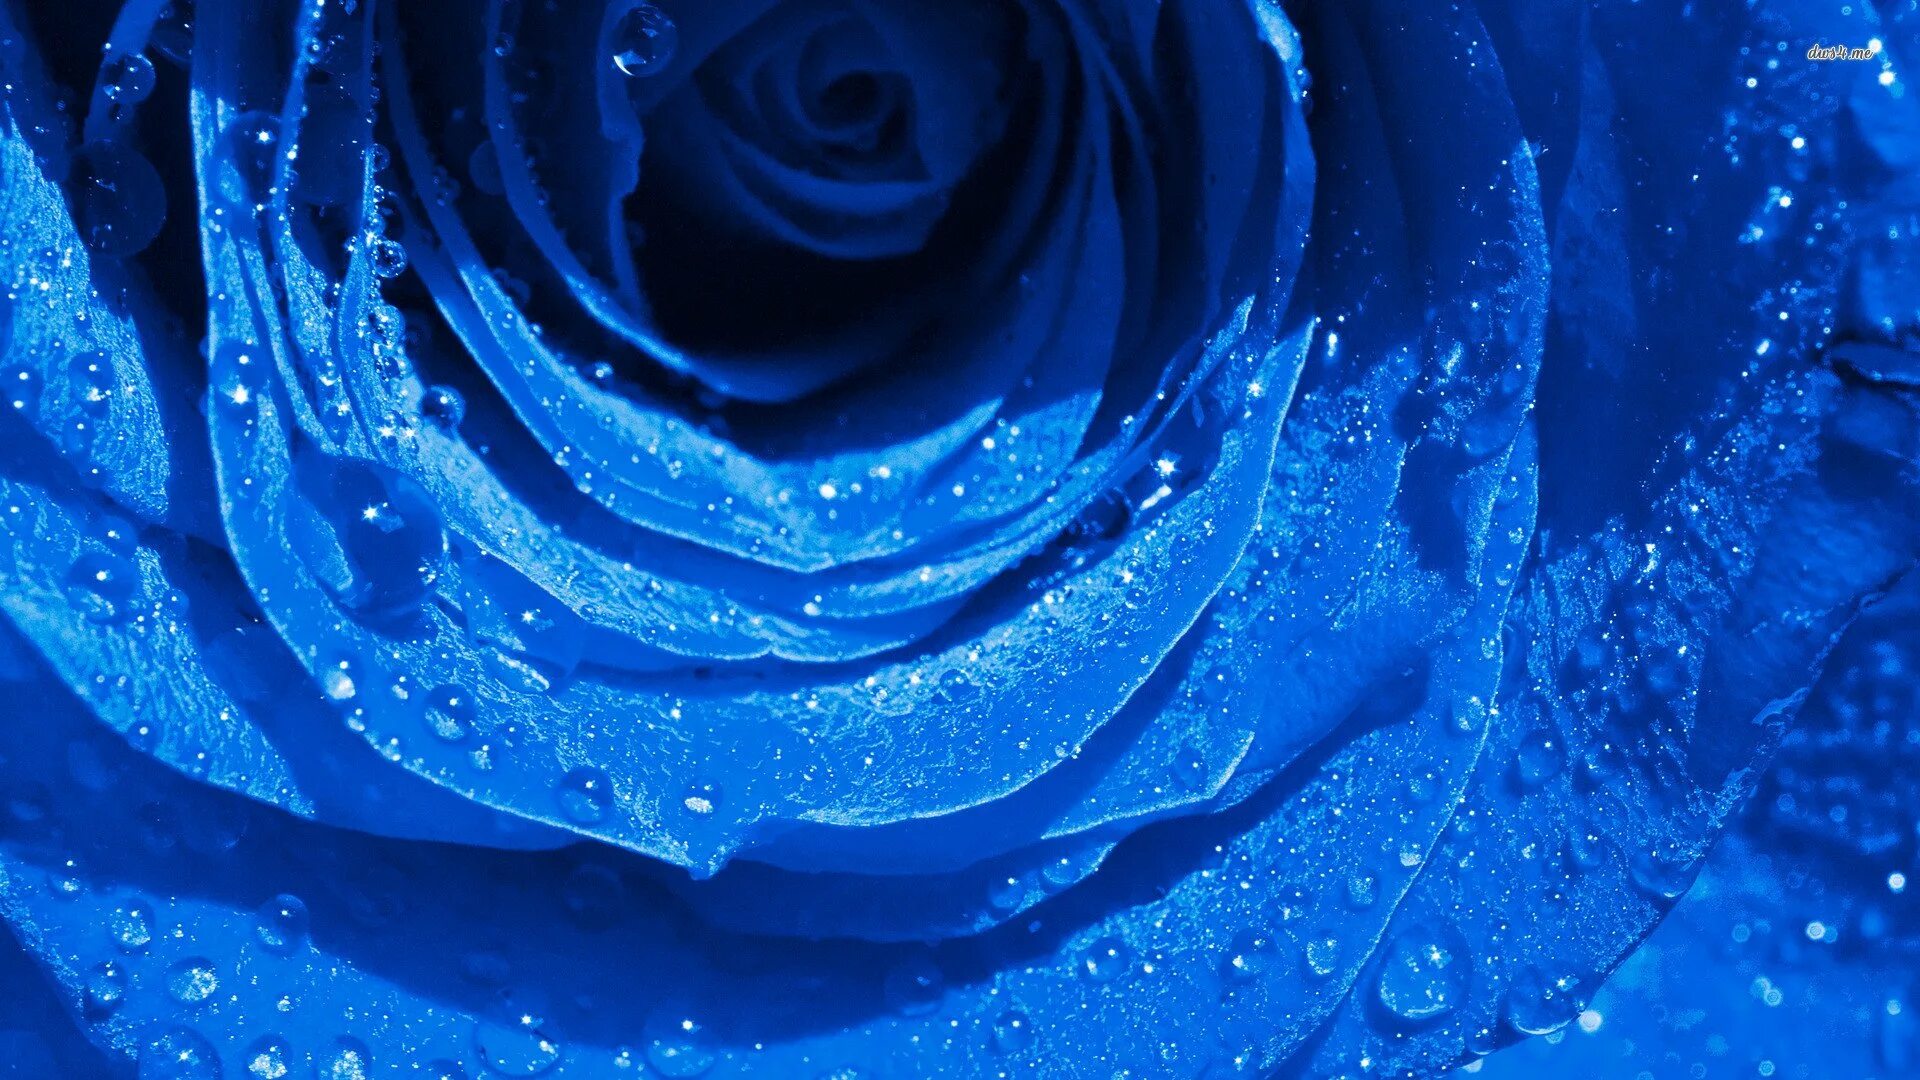 Синие картинки распечатать. Синяя роза. Синие картинки. Красивый синий. Синие картинки на рабочий стол.